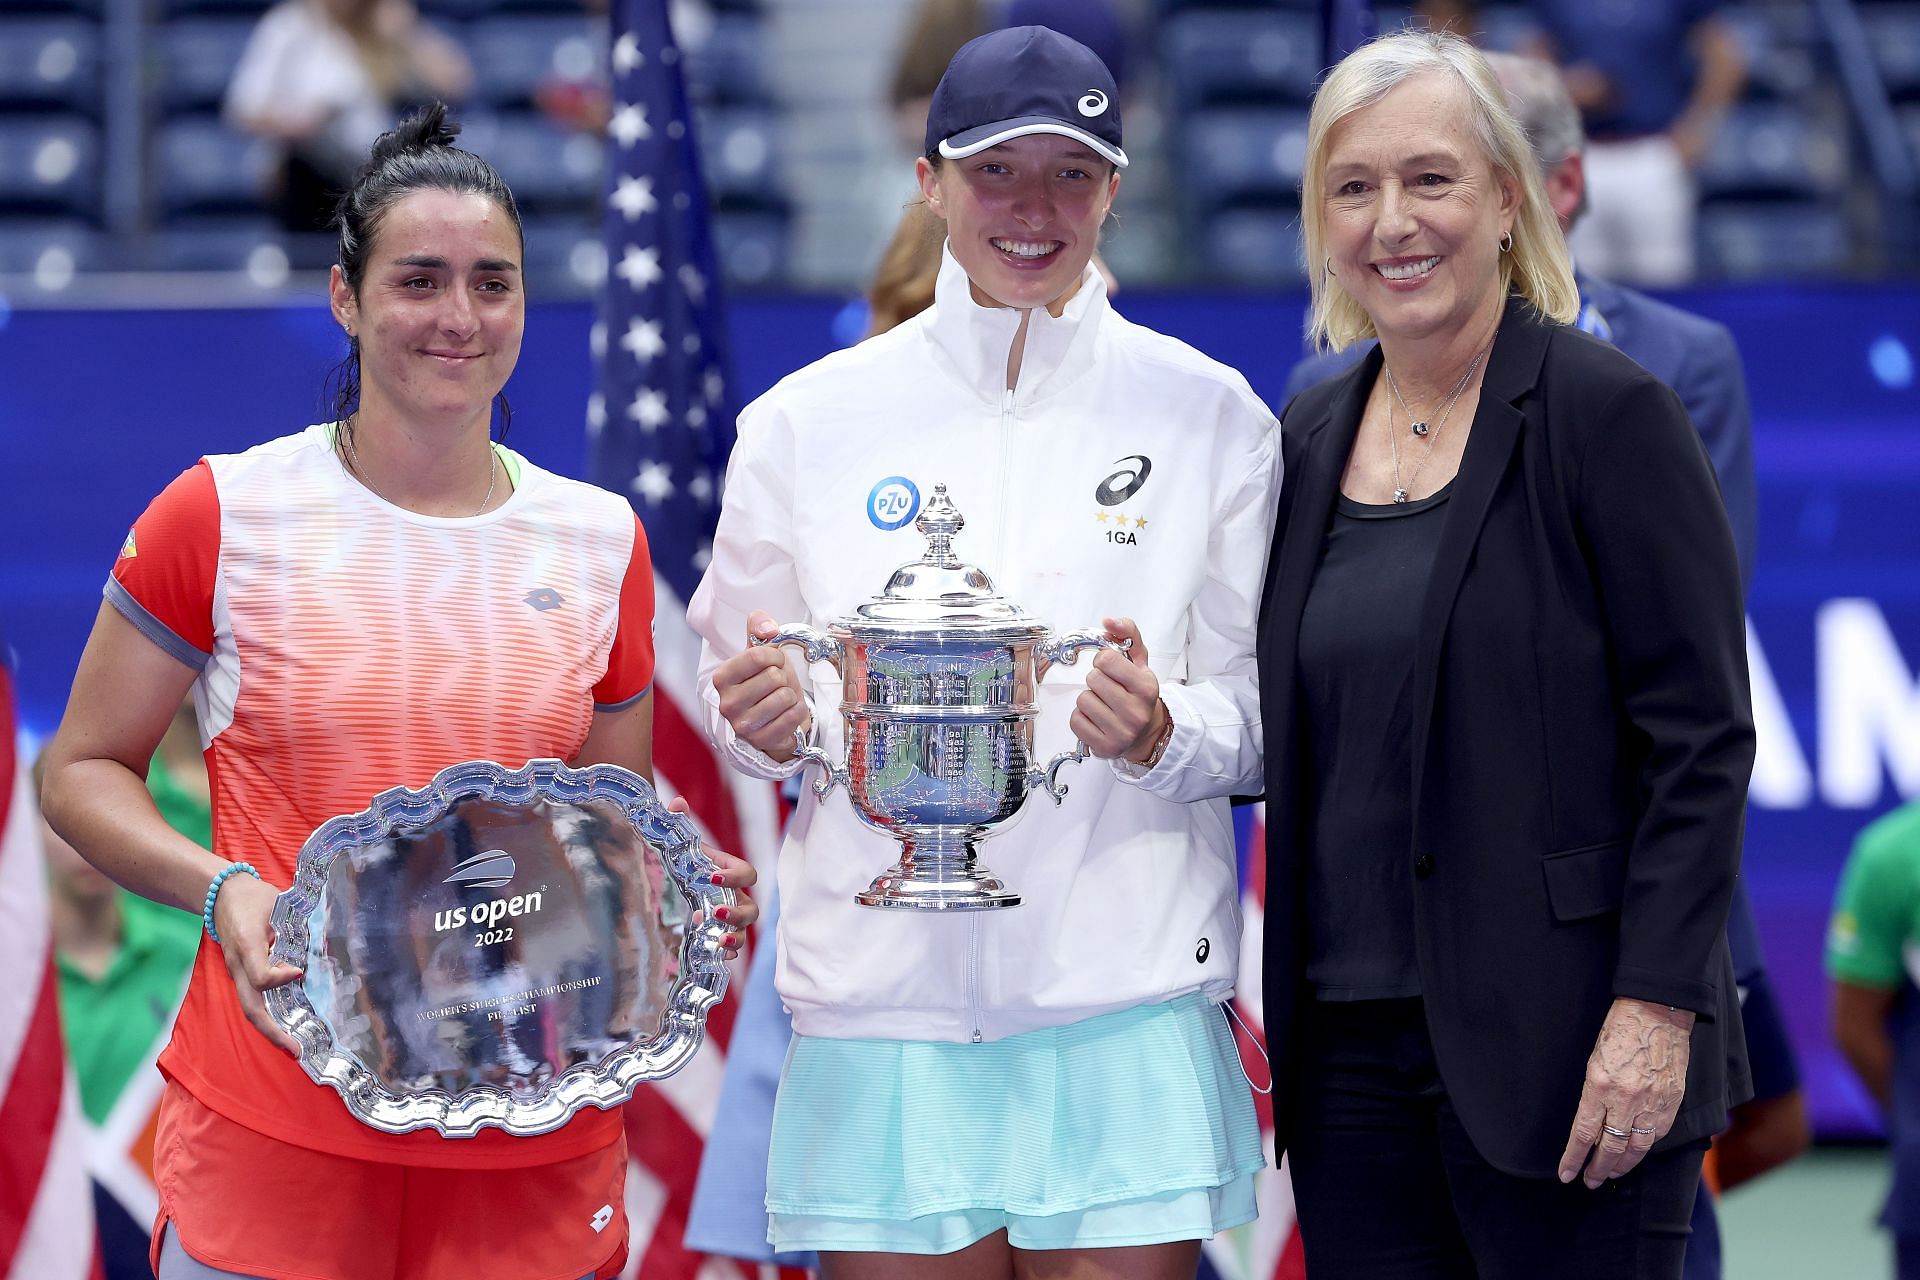 Iga Swiatek and Martina Navratilova pose for a picture at the 2022 US Open